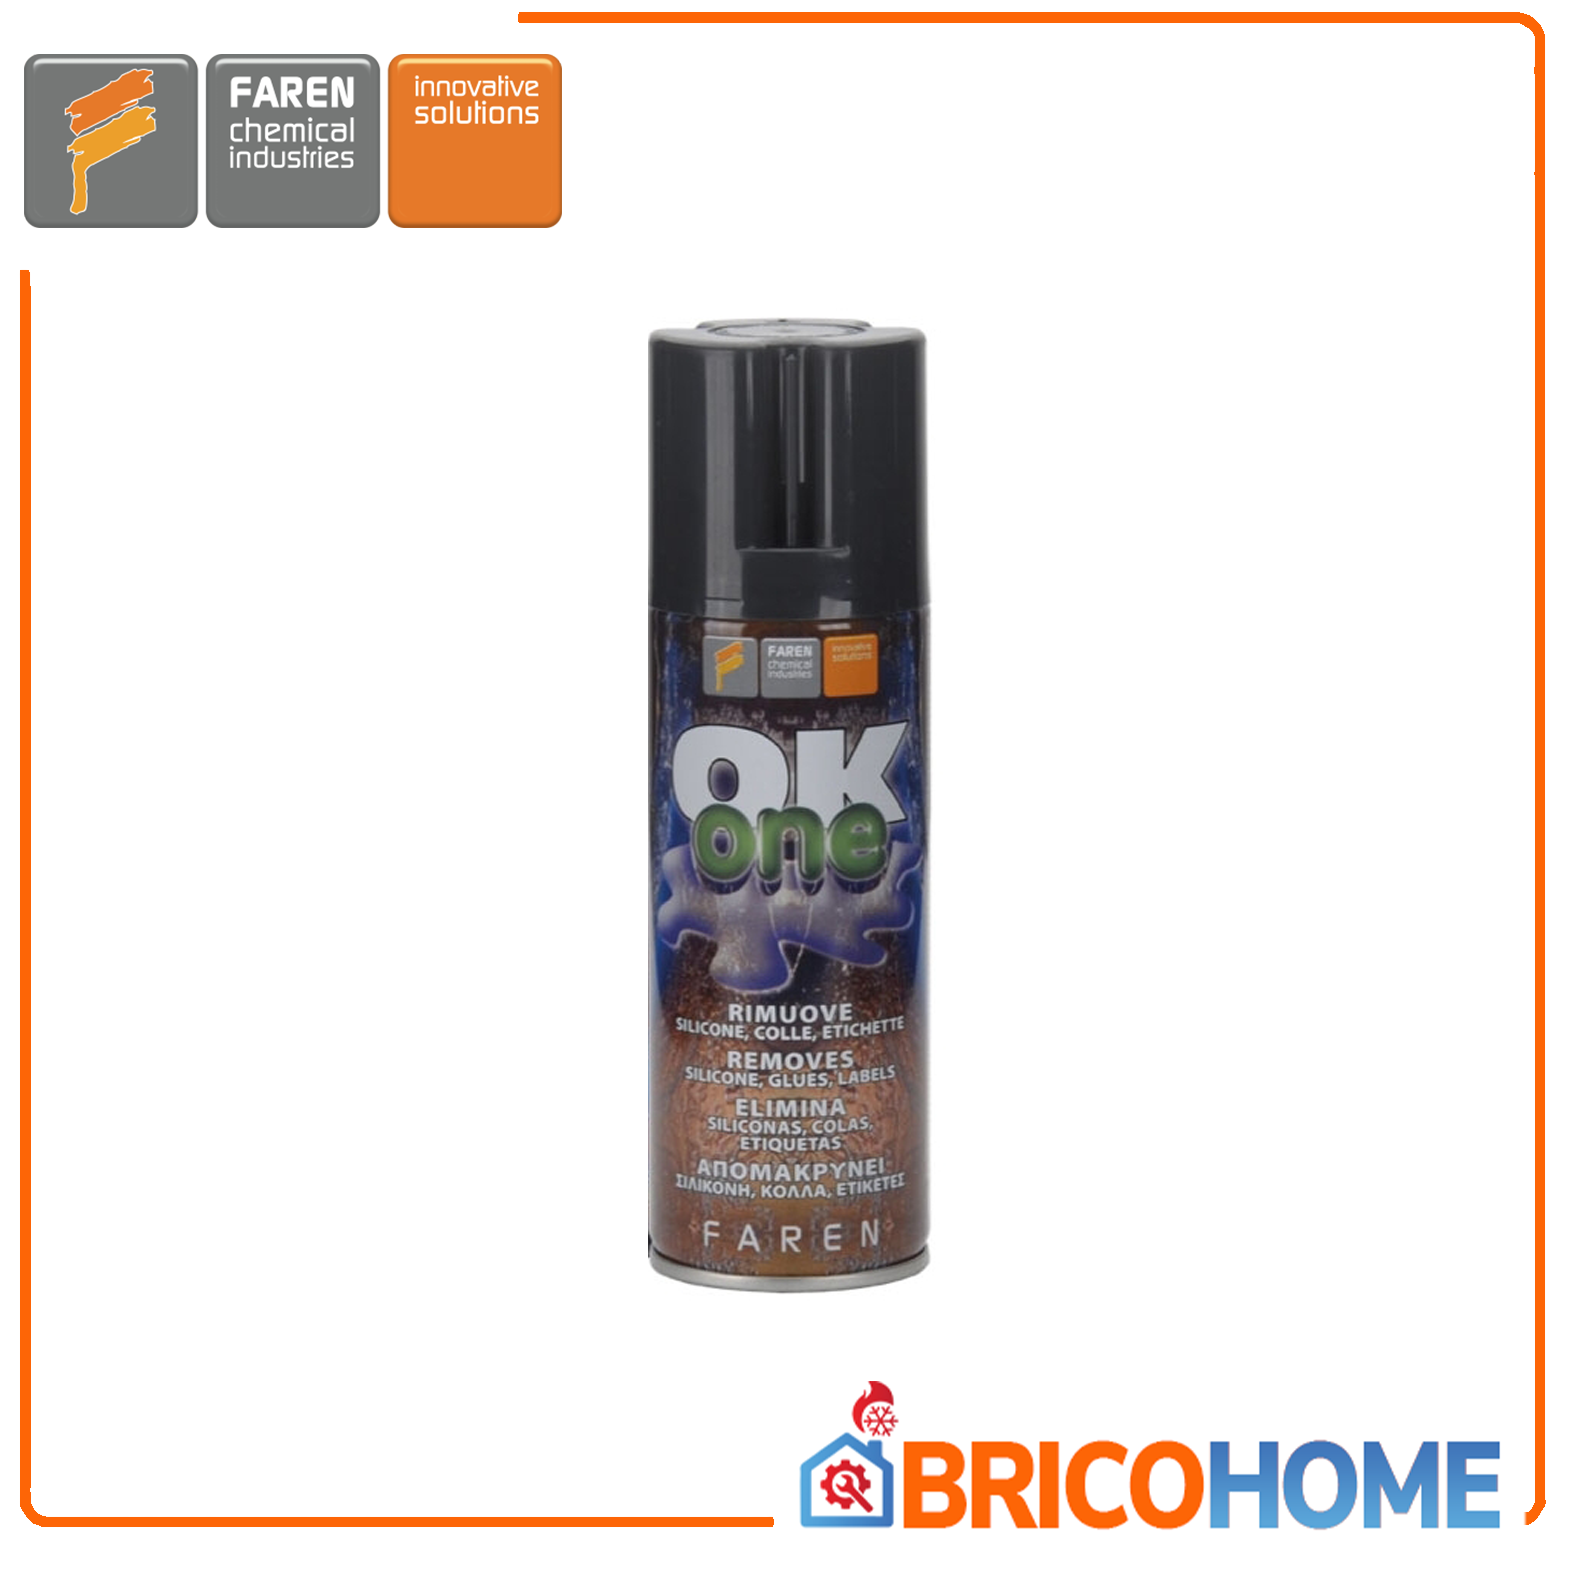 Silicone remover - glues - mastics - resin - tar - peel off labels Spray OK ONE FAREN